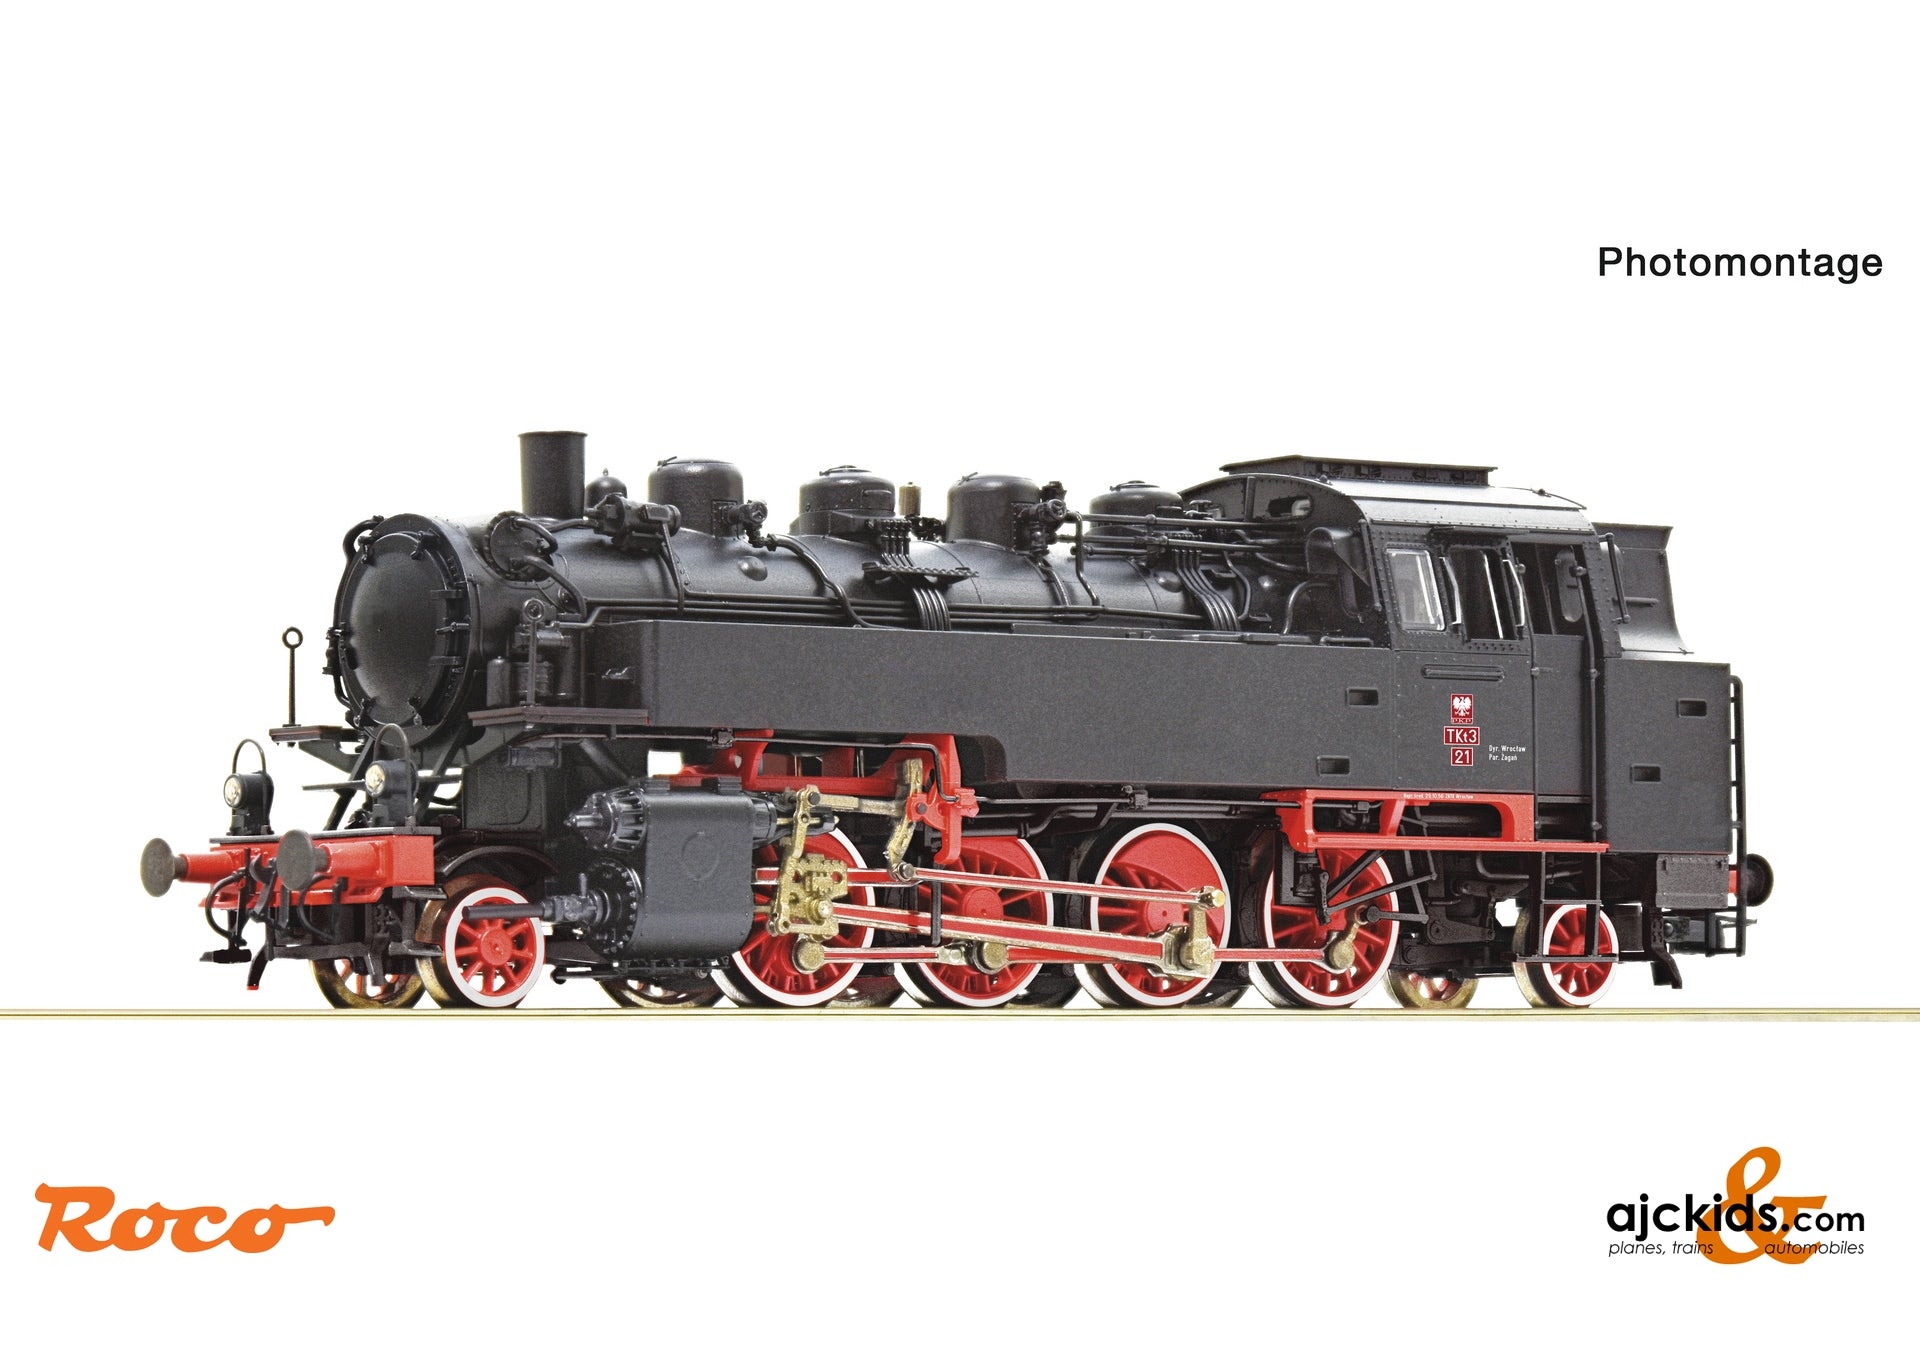 Roco 7100002 - Steam locomotive TKt3, PKP at Ajckids.com